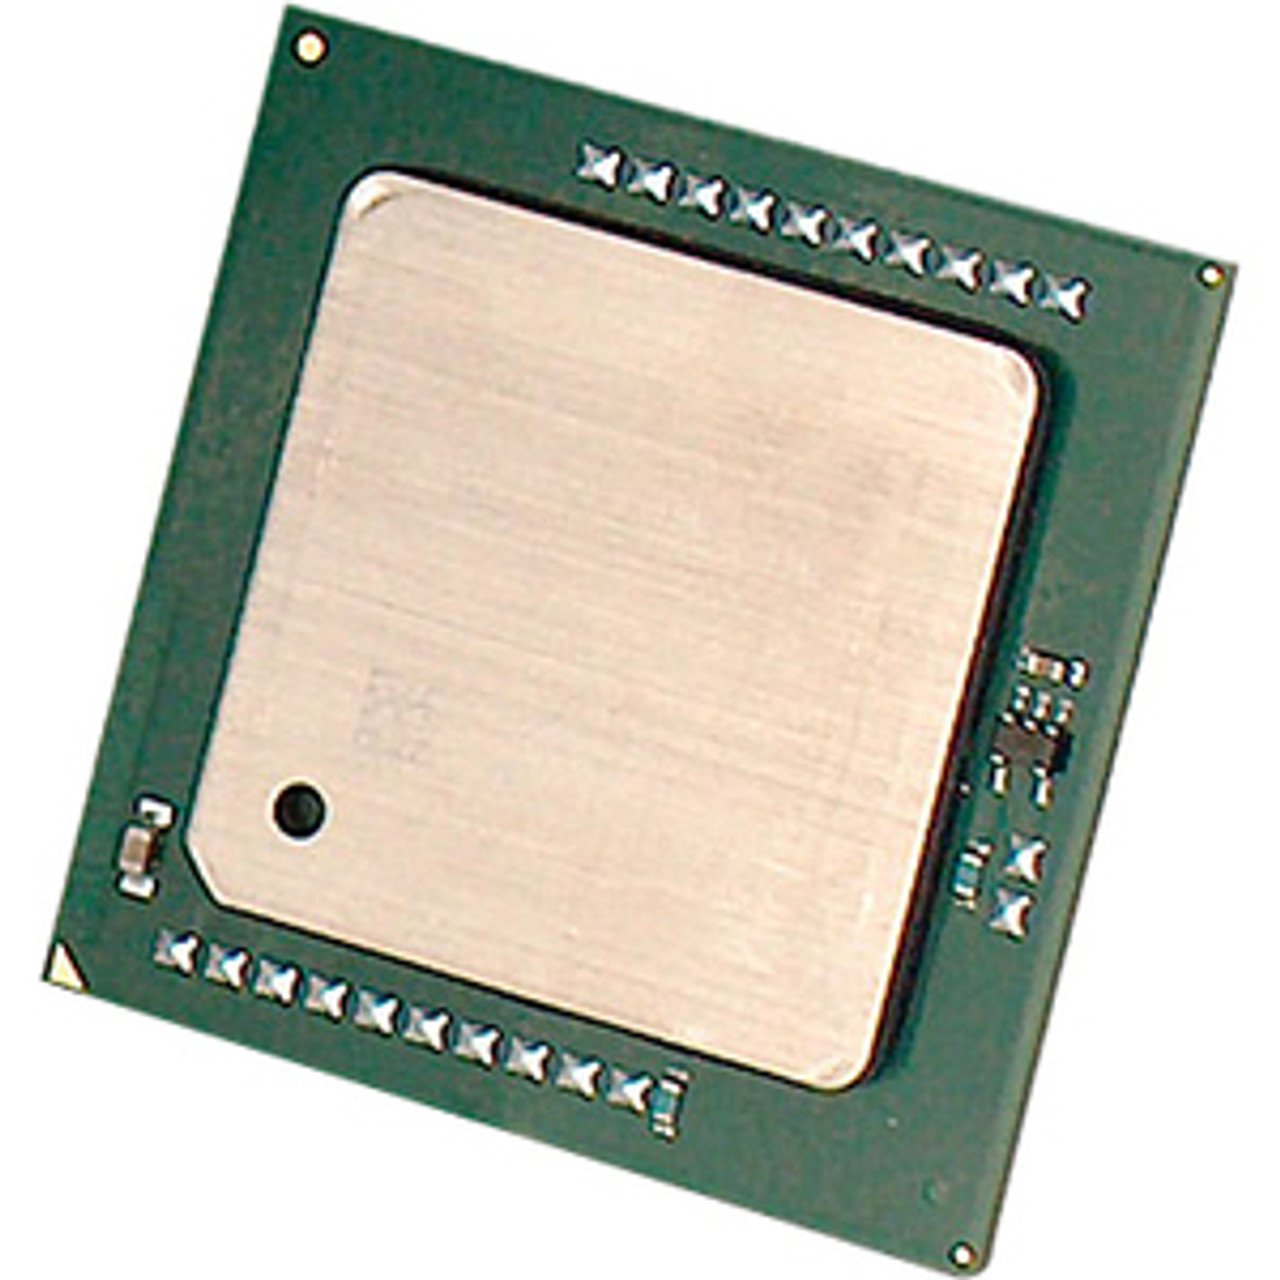 718367-S21 HPE Sourcing Intel Xeon E5-2600 v2 E5-2643 v2 Hexa-core (6